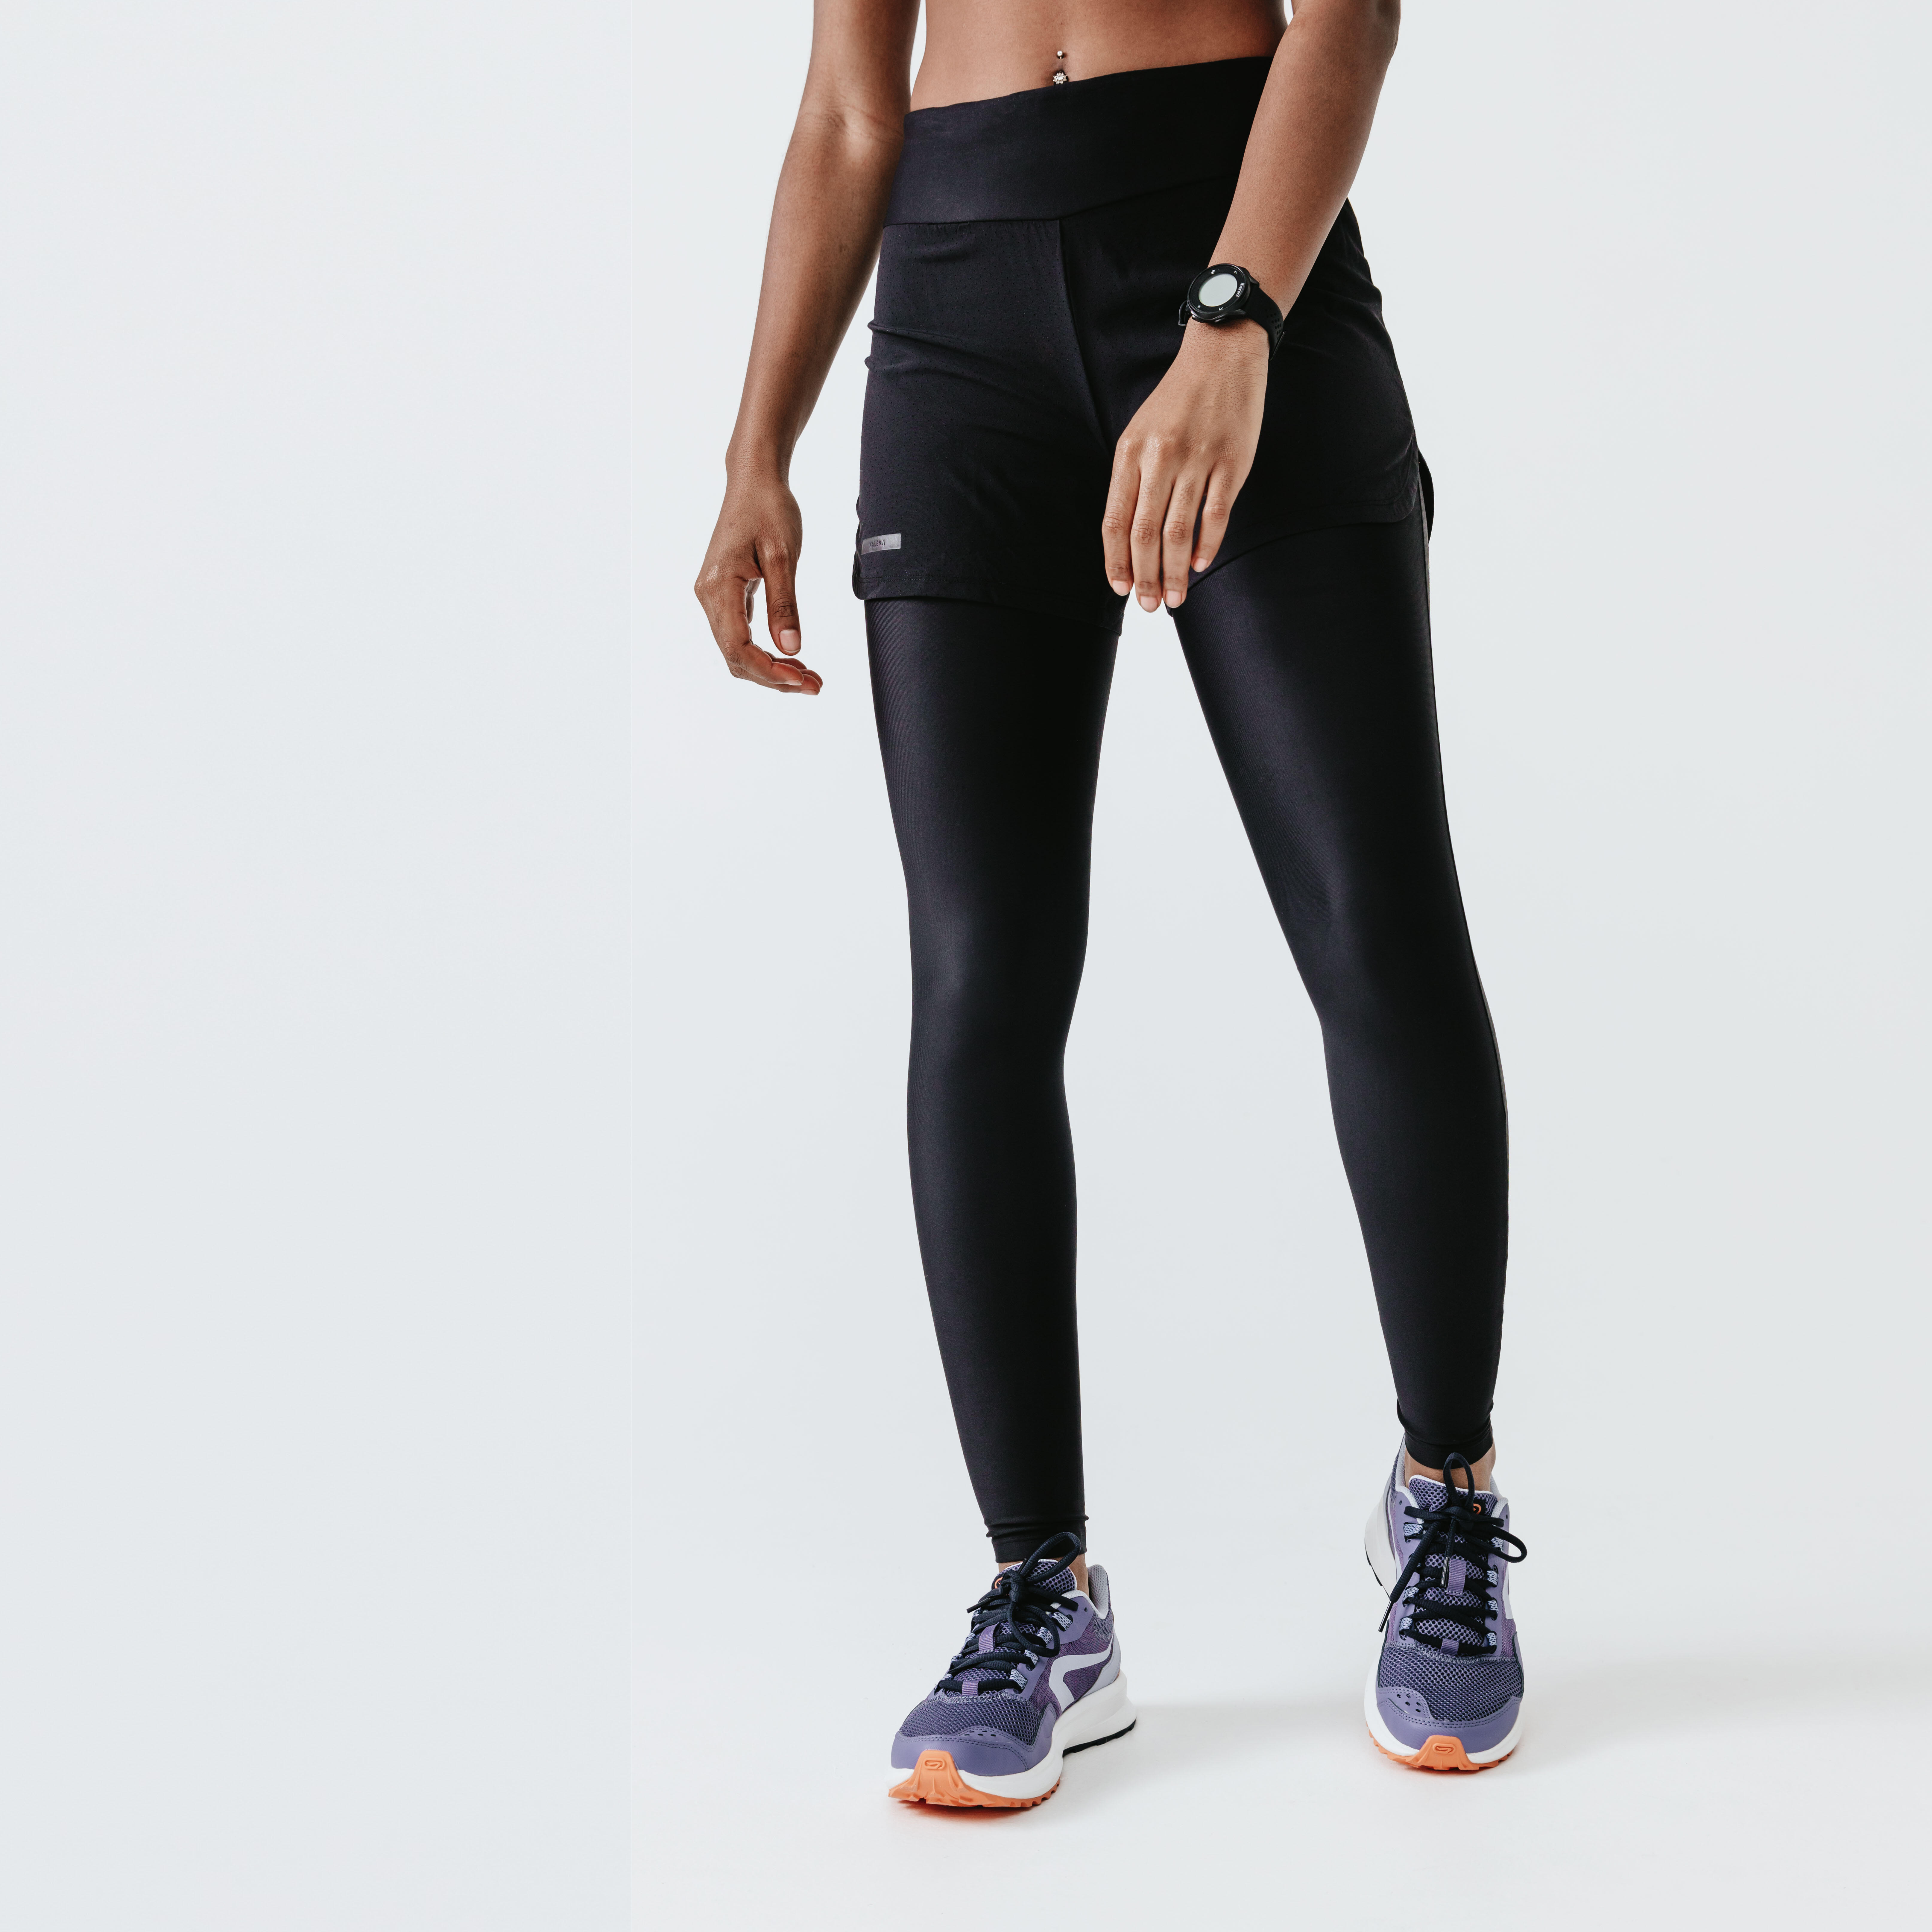 KALENJI Run Dry Women's Running Short Leggings, Black